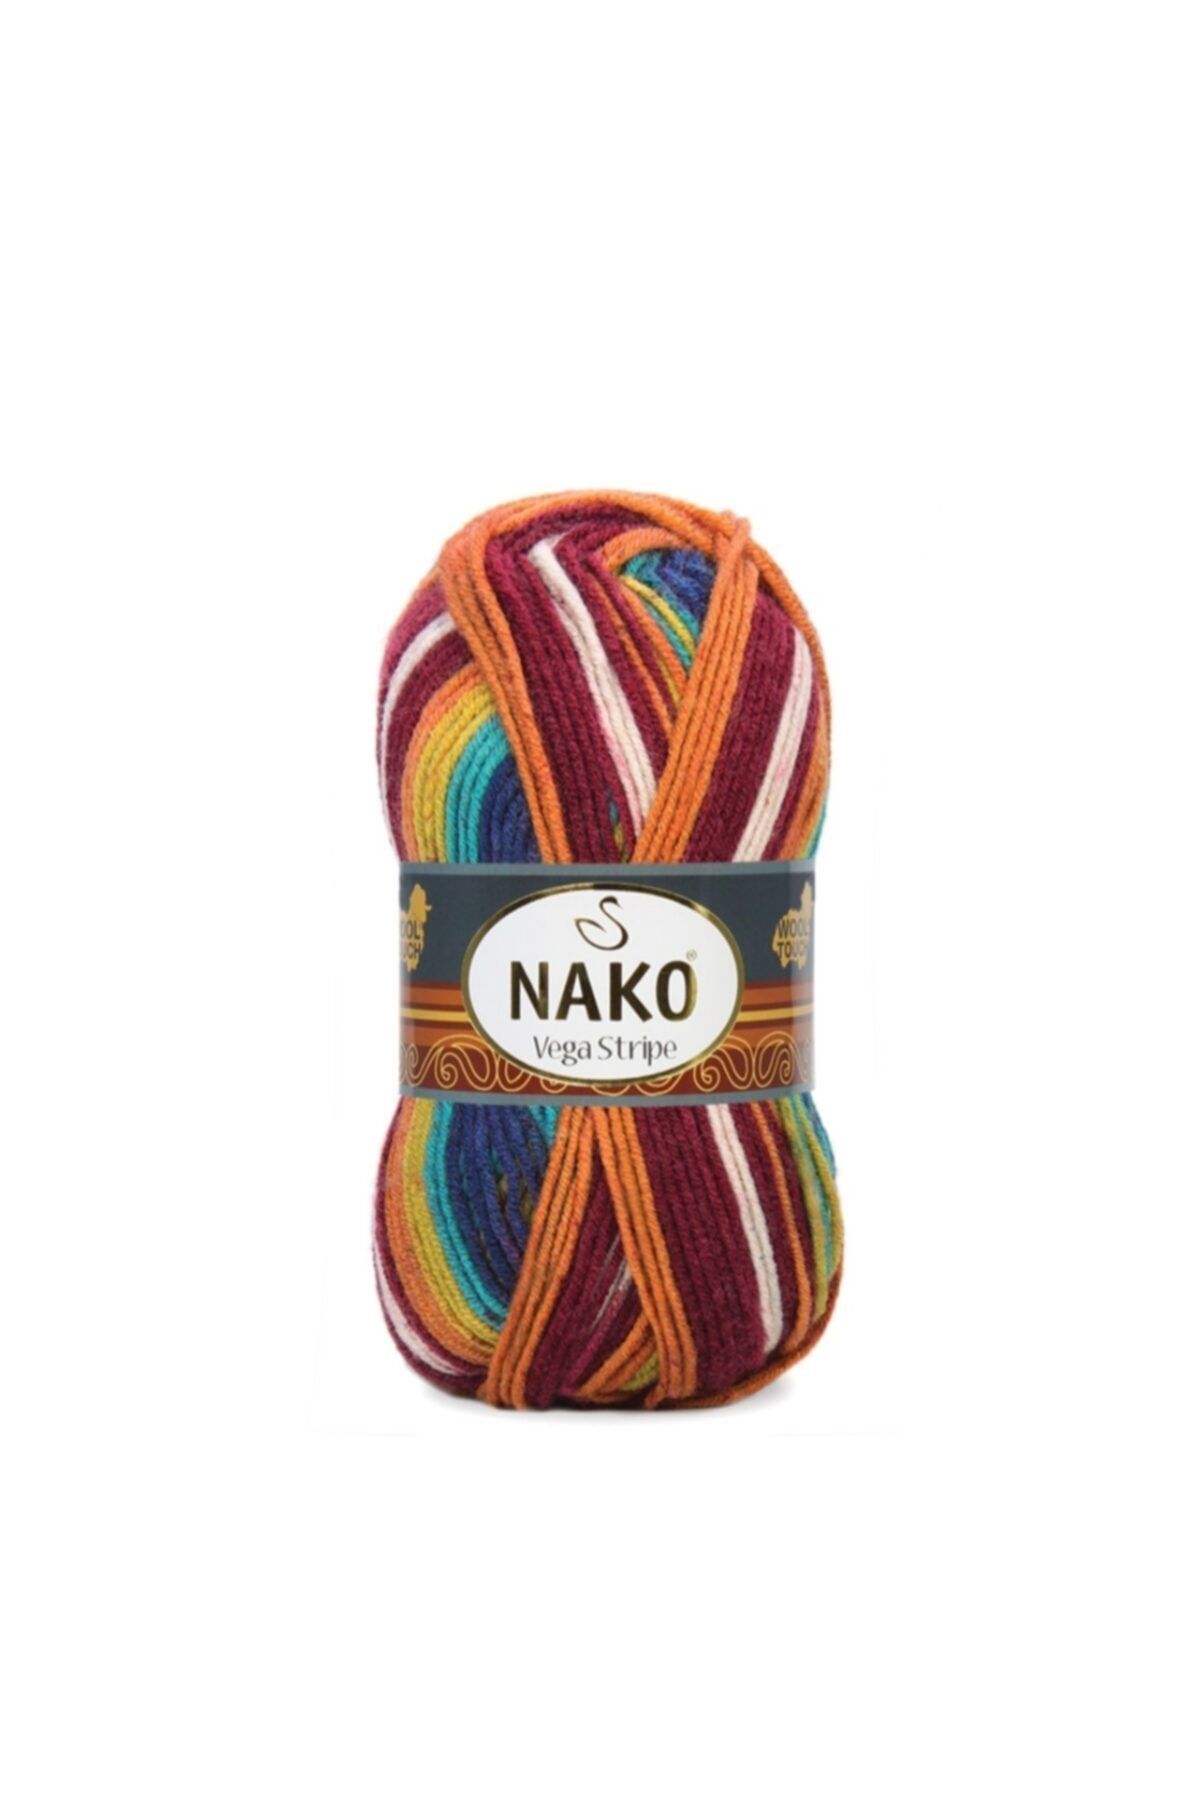 Nako ( 5 Adet ) Vega Stripe 82409 El Örgü Ipi Yelek Hırka Kazak Ipliği Bebe Ipi